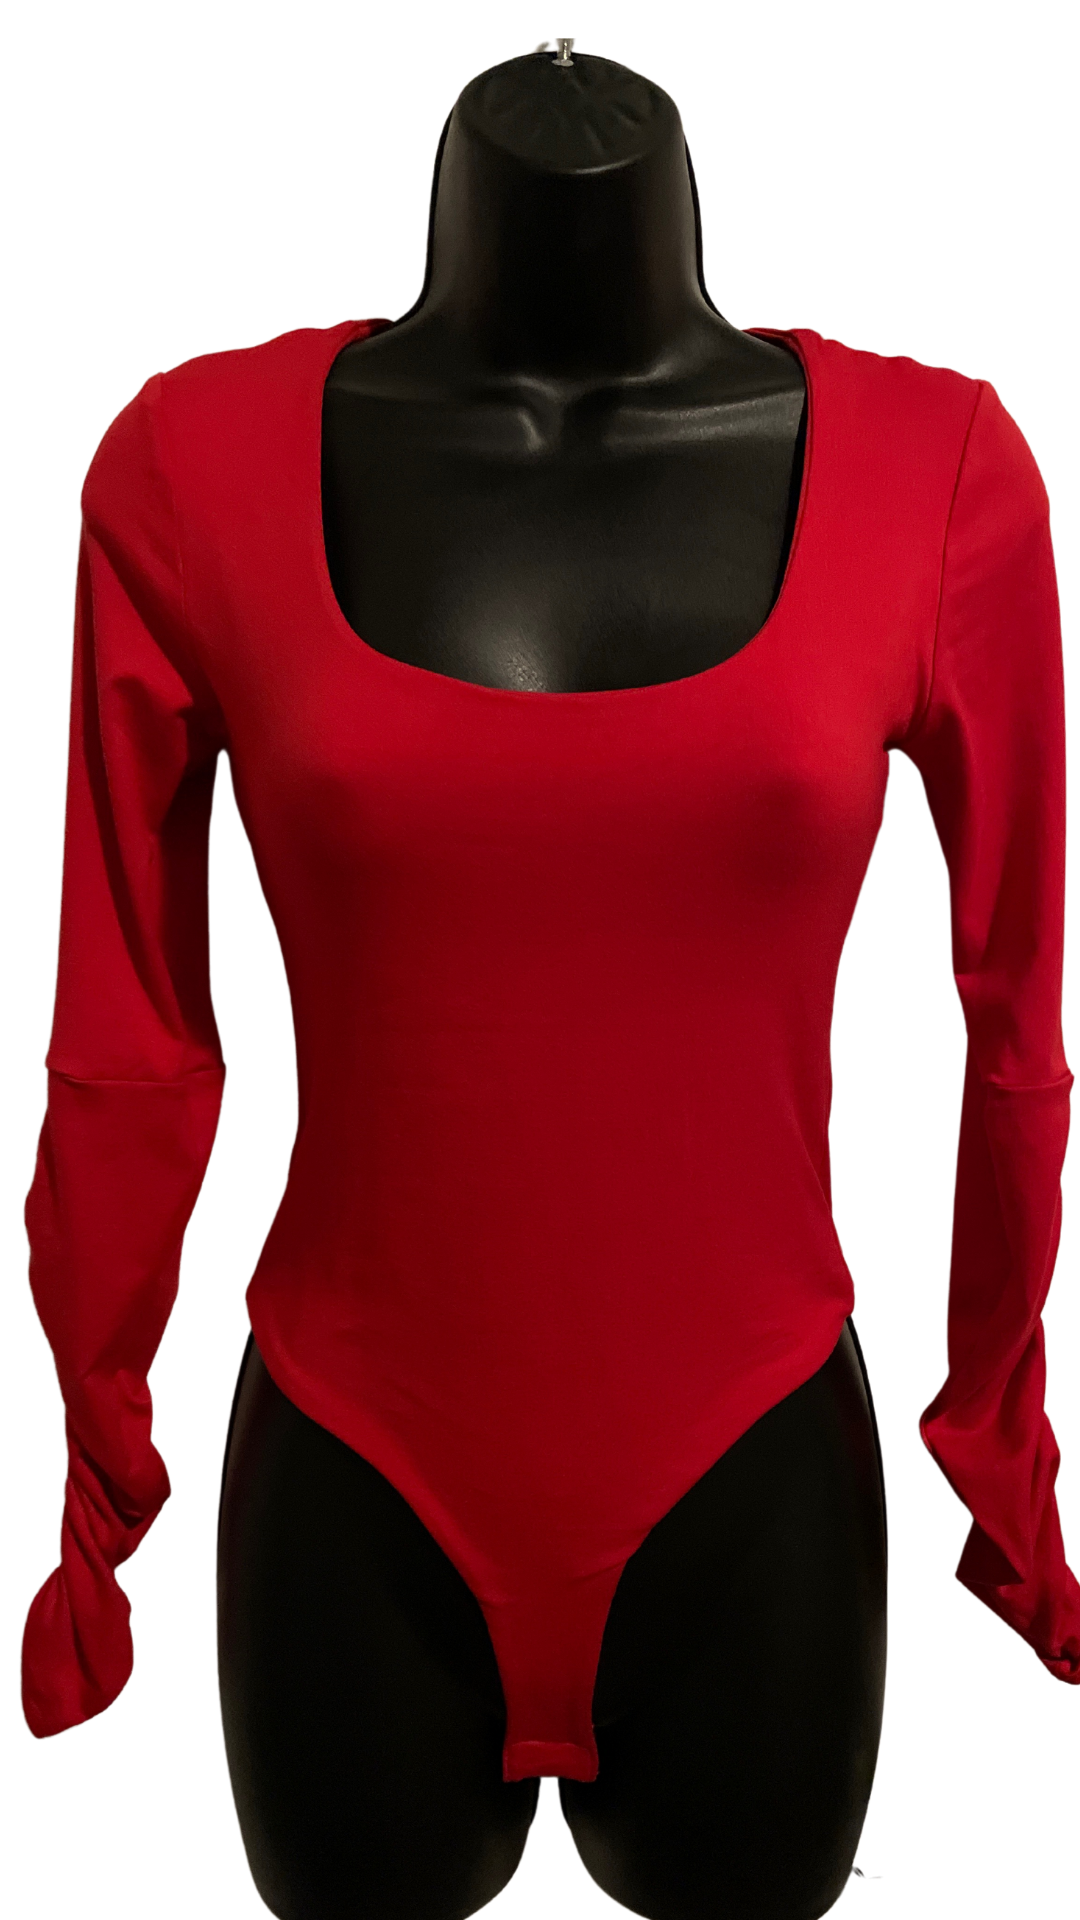 XOXO red bodysuit